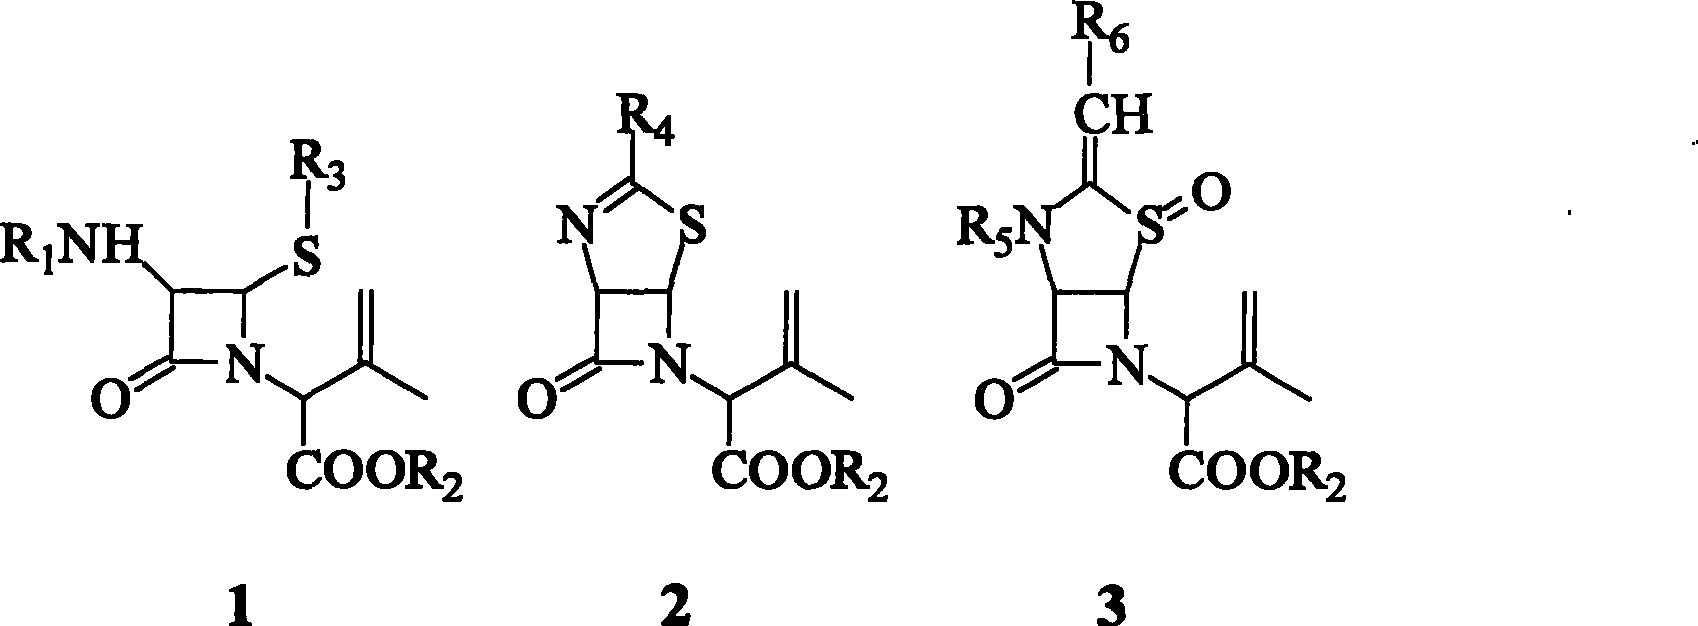 Chloridization method for nitrogen heterocyclic butanone isobutene derivatives